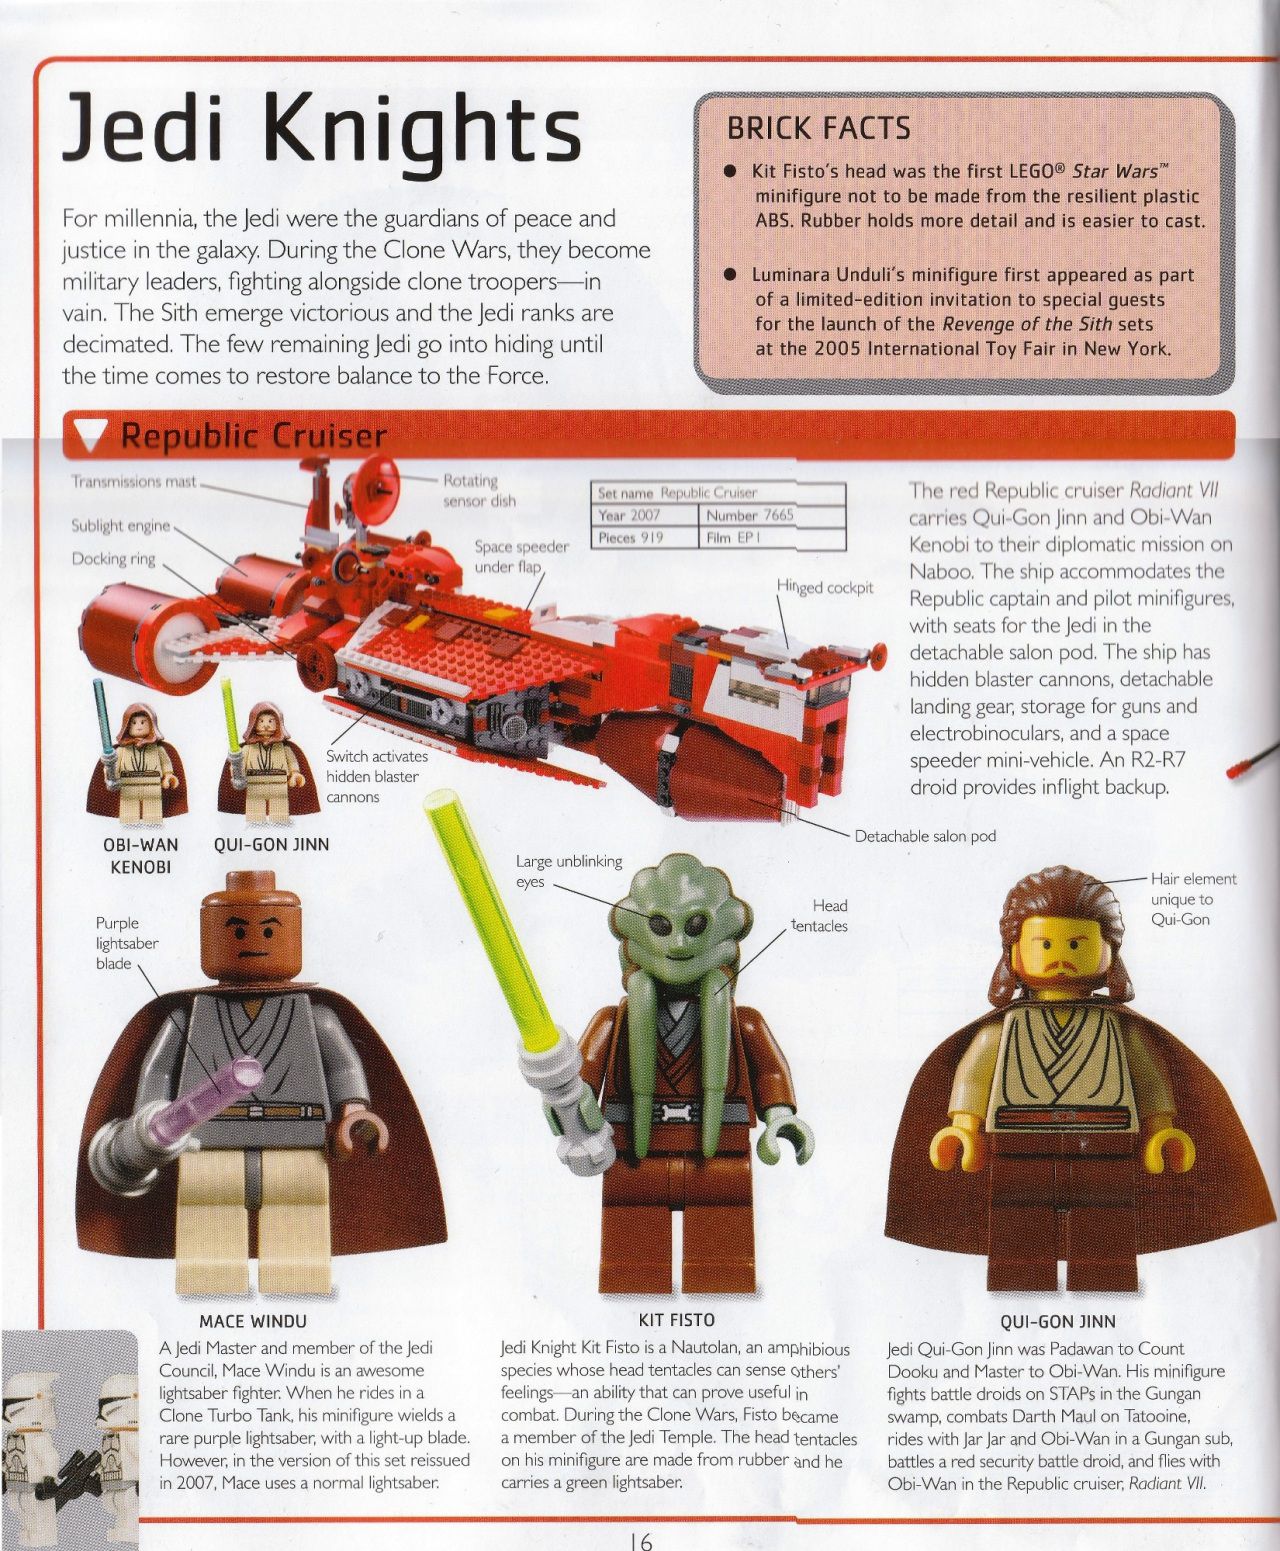 Lego Star Wars The Visual Dictionary 2009 Lego Star Wars The Visual Dictionary 2009 17